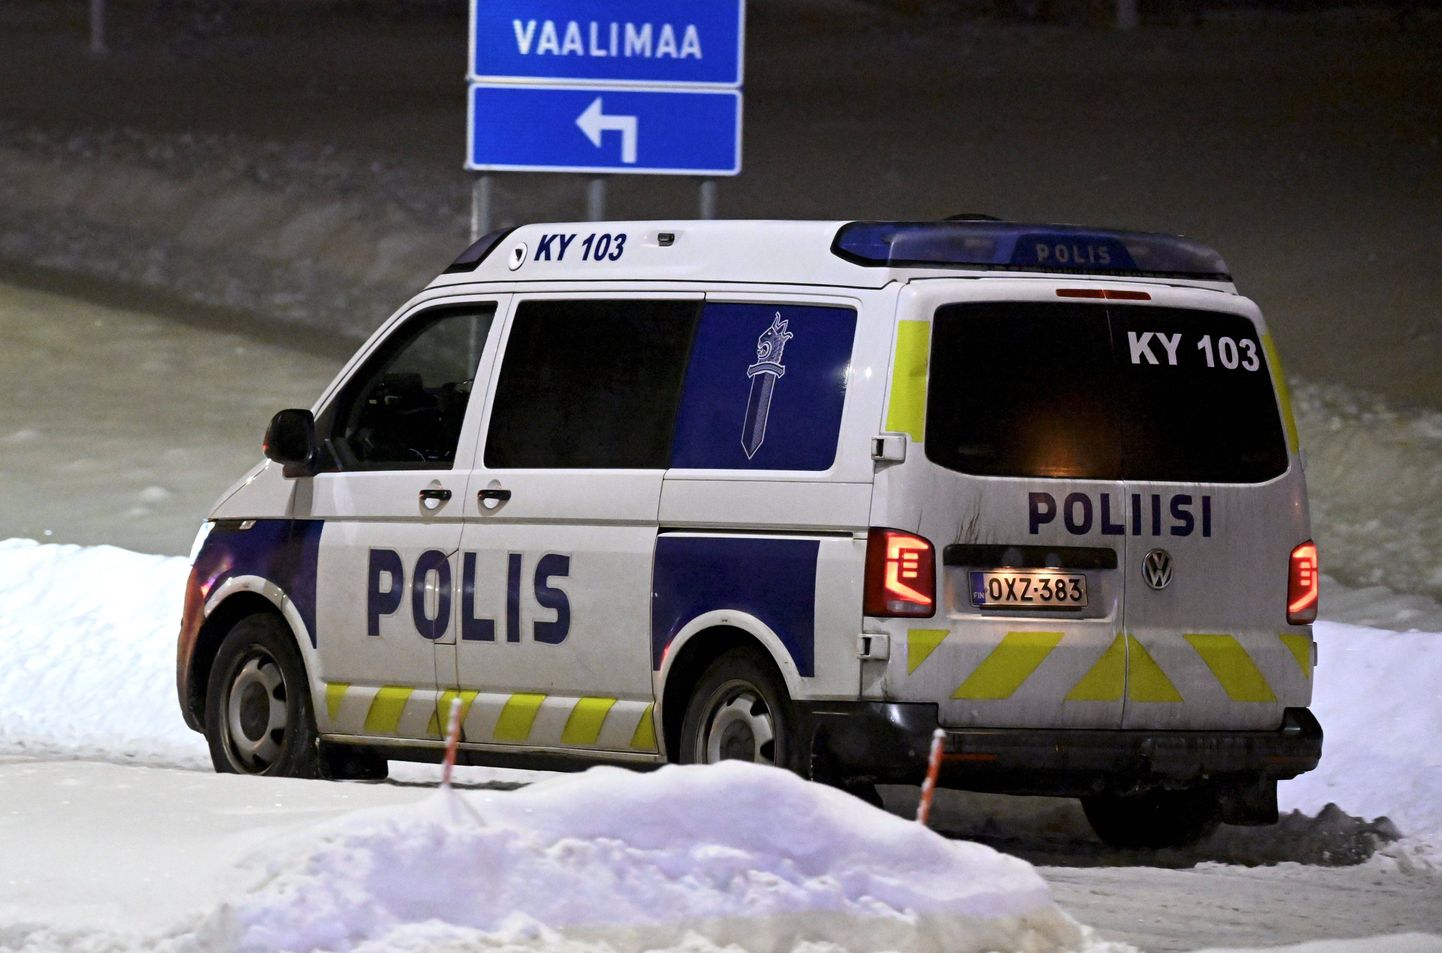 Soome politseikaubik.